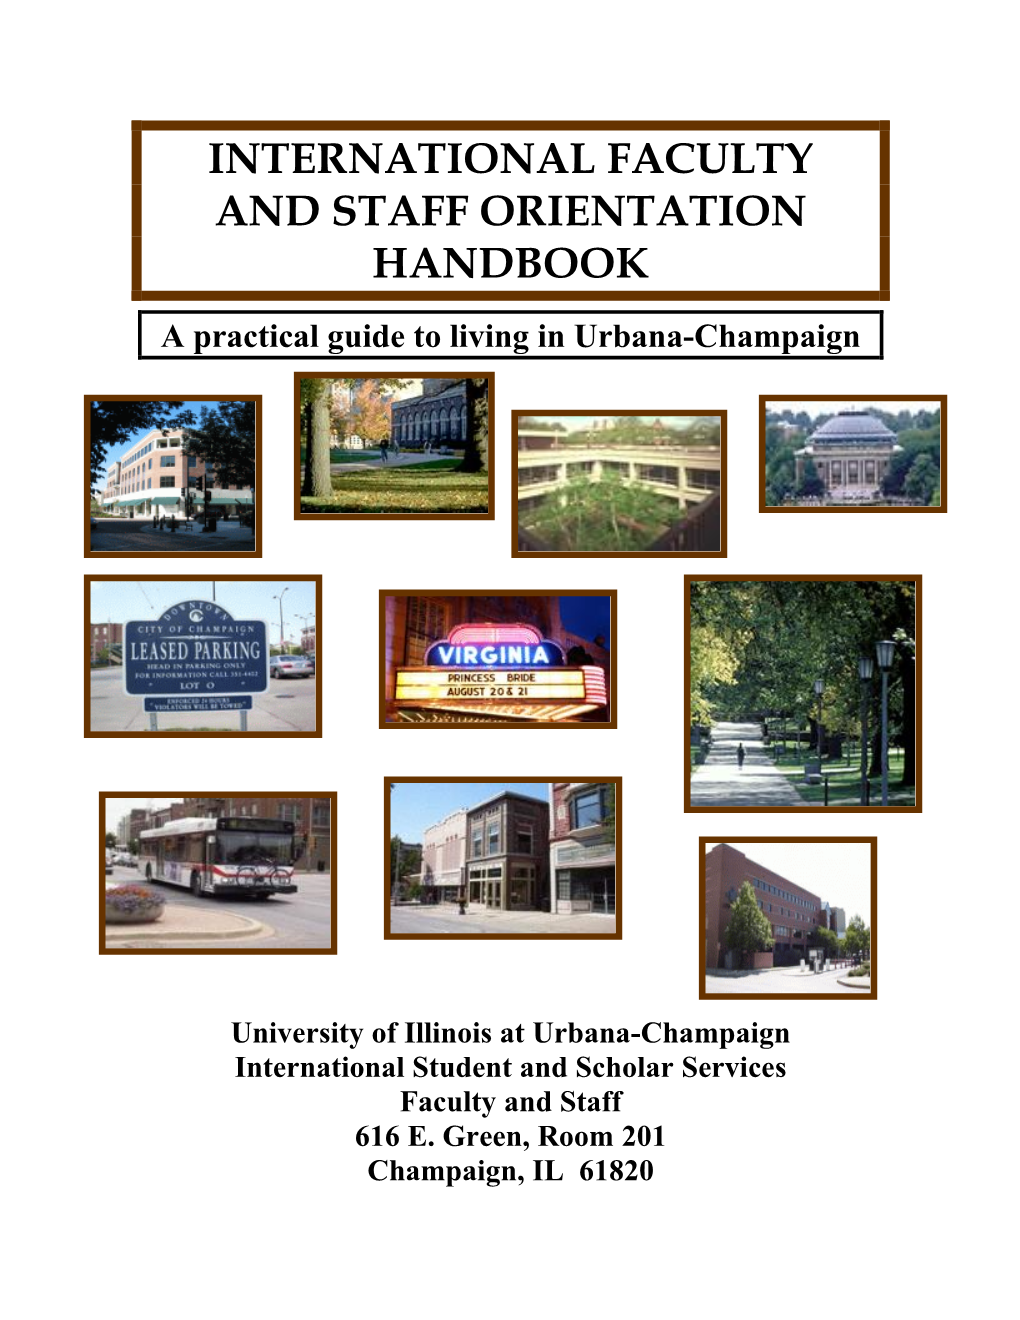 International Faculty and Staff Orientation Handbook